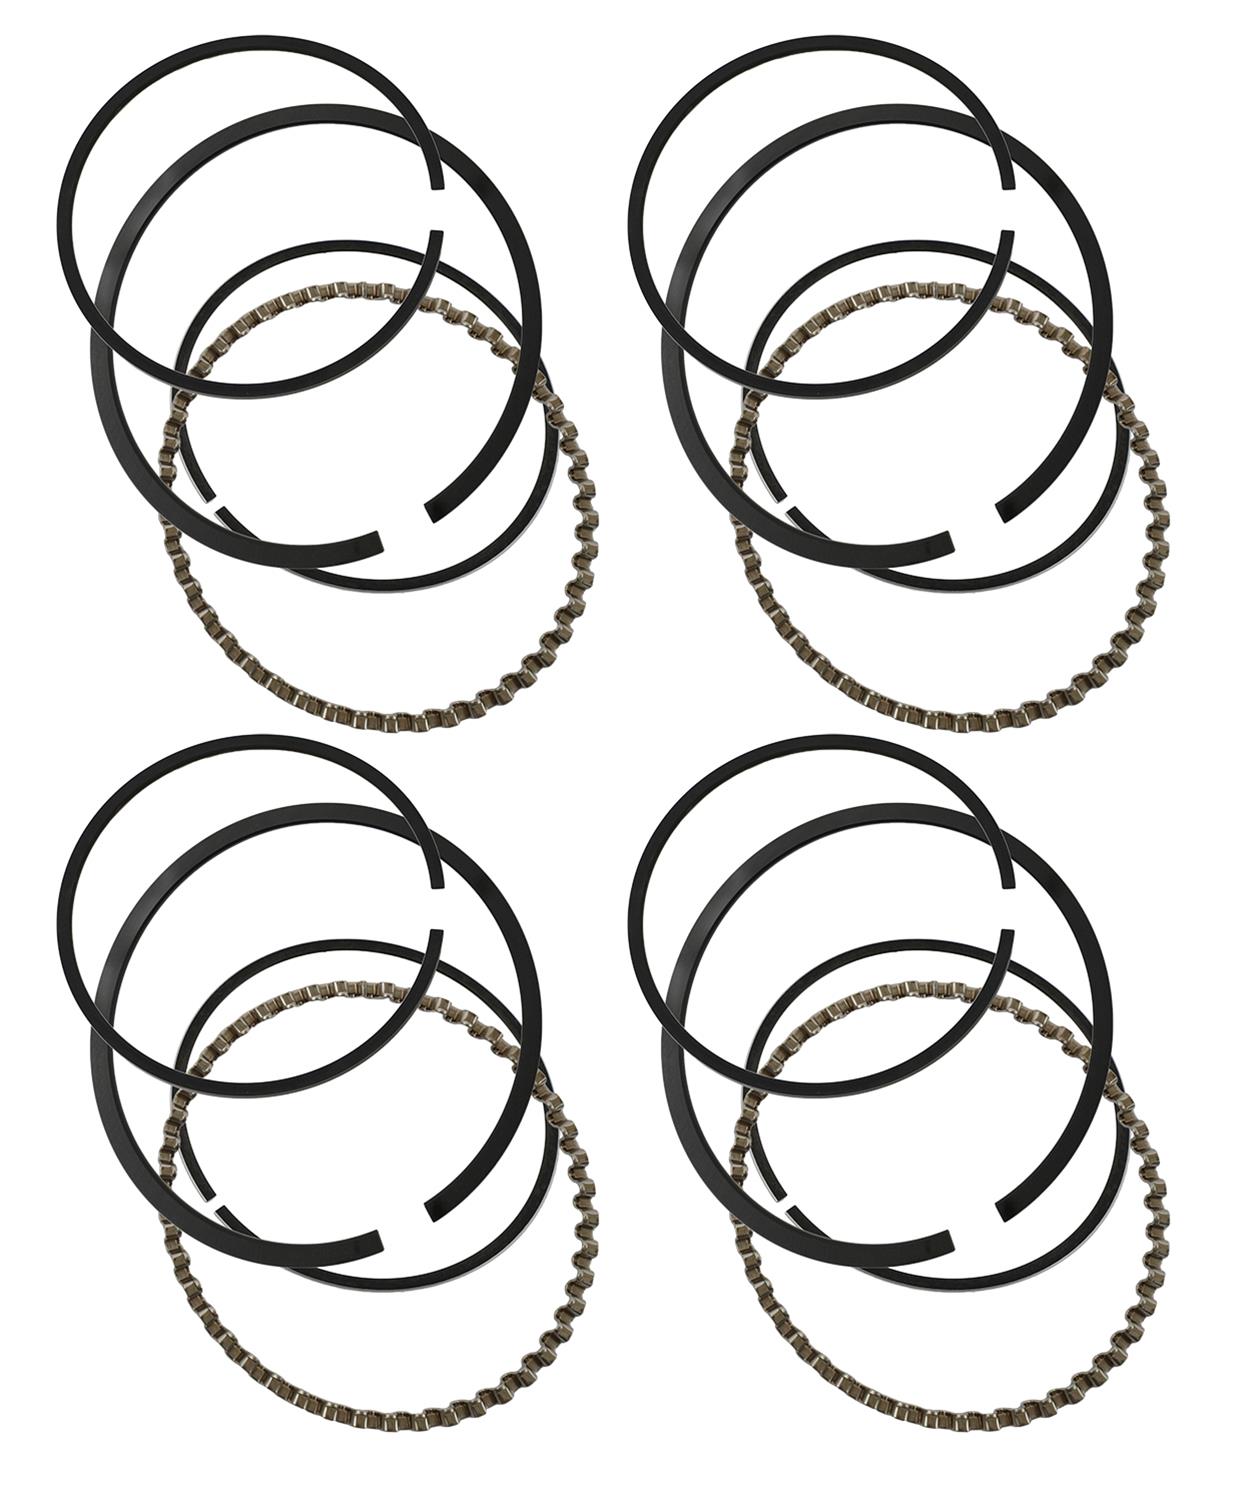 Hastings 563080 6-Cylinder Piston Ring Set 